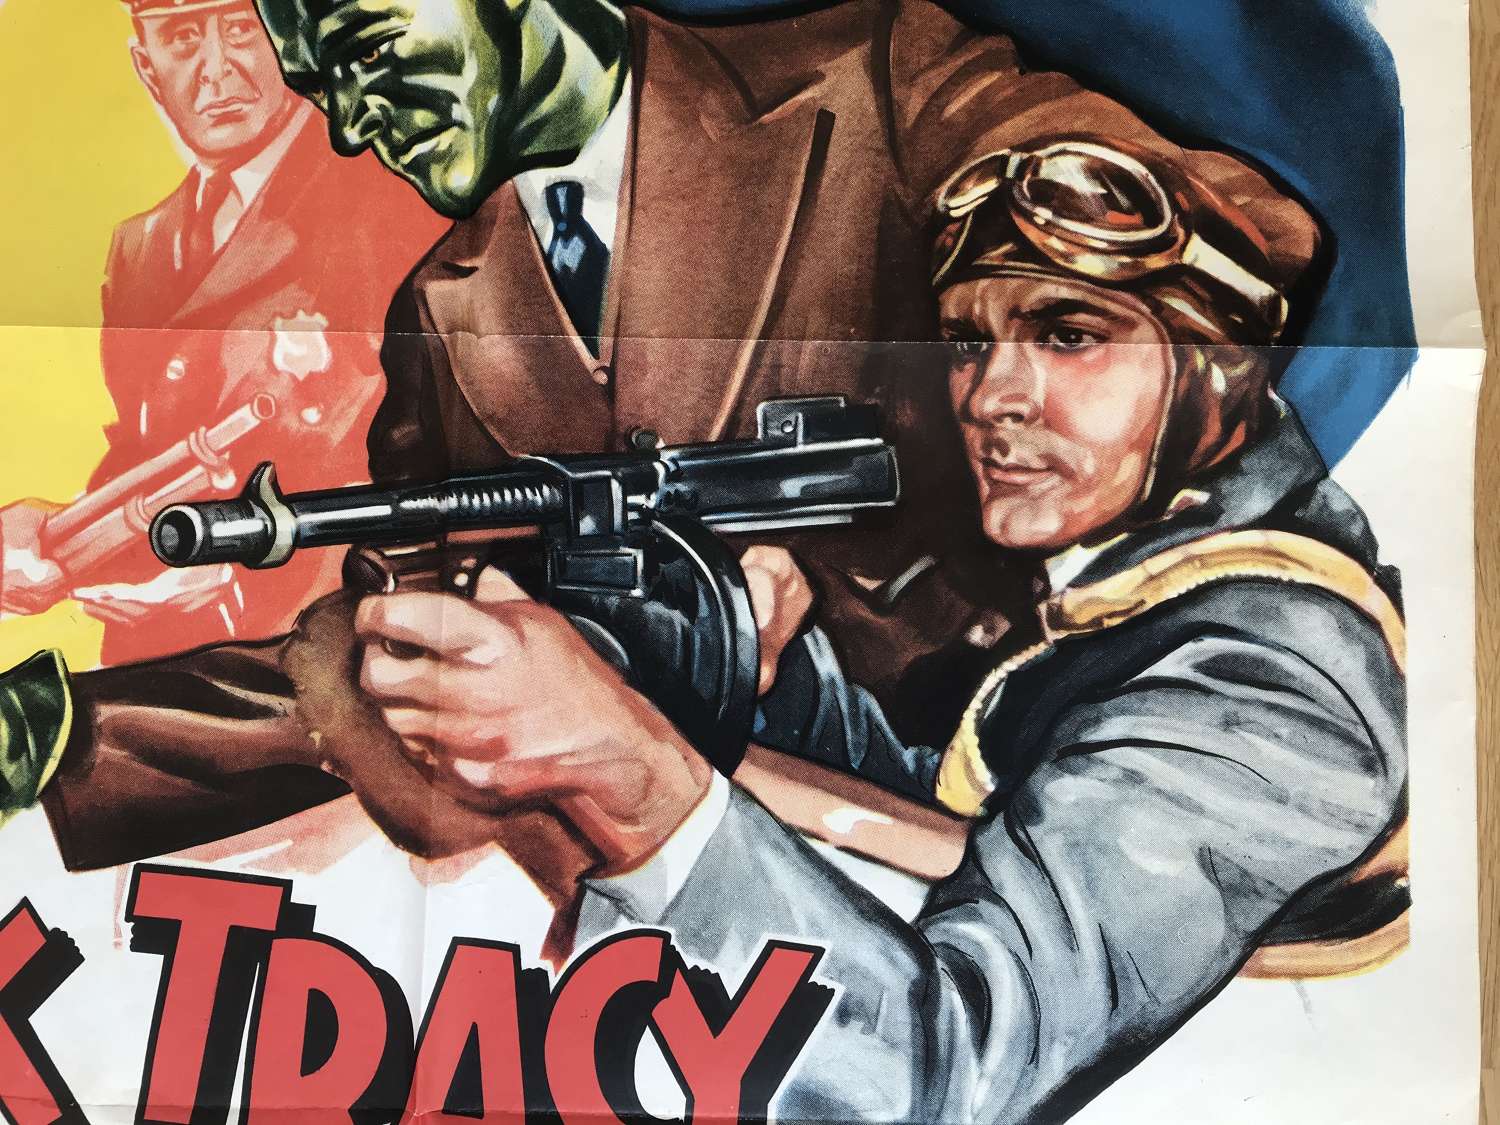 Dick Tracy vs phantom Empire film poster dated 1941